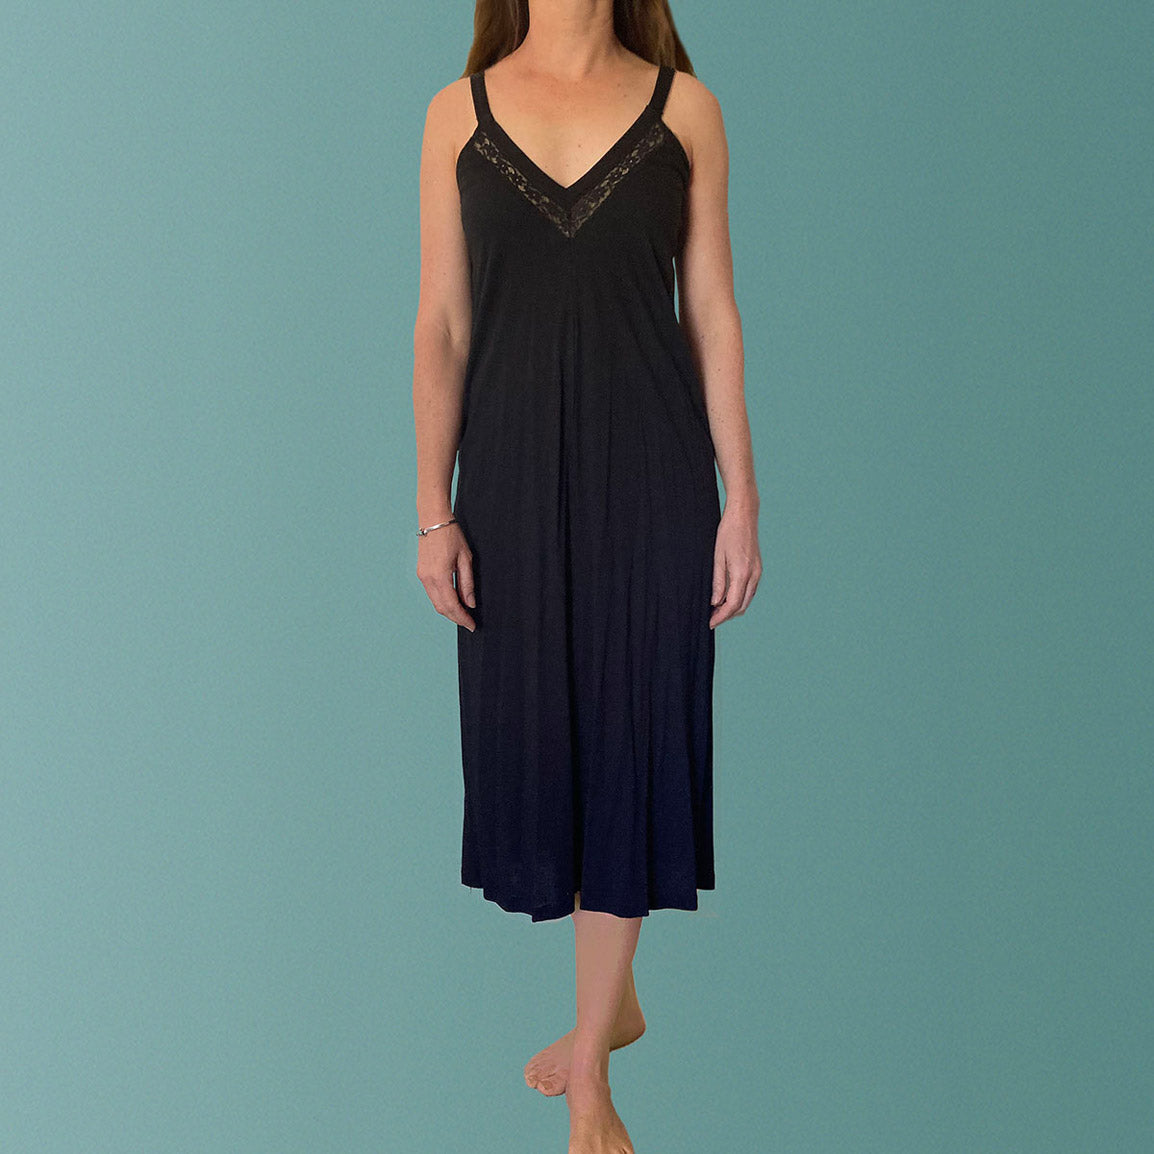 Womens sleepwear Australia. Nighties cotton. Organic cotton and lace nightgown made in Australia. Nighties buy online.